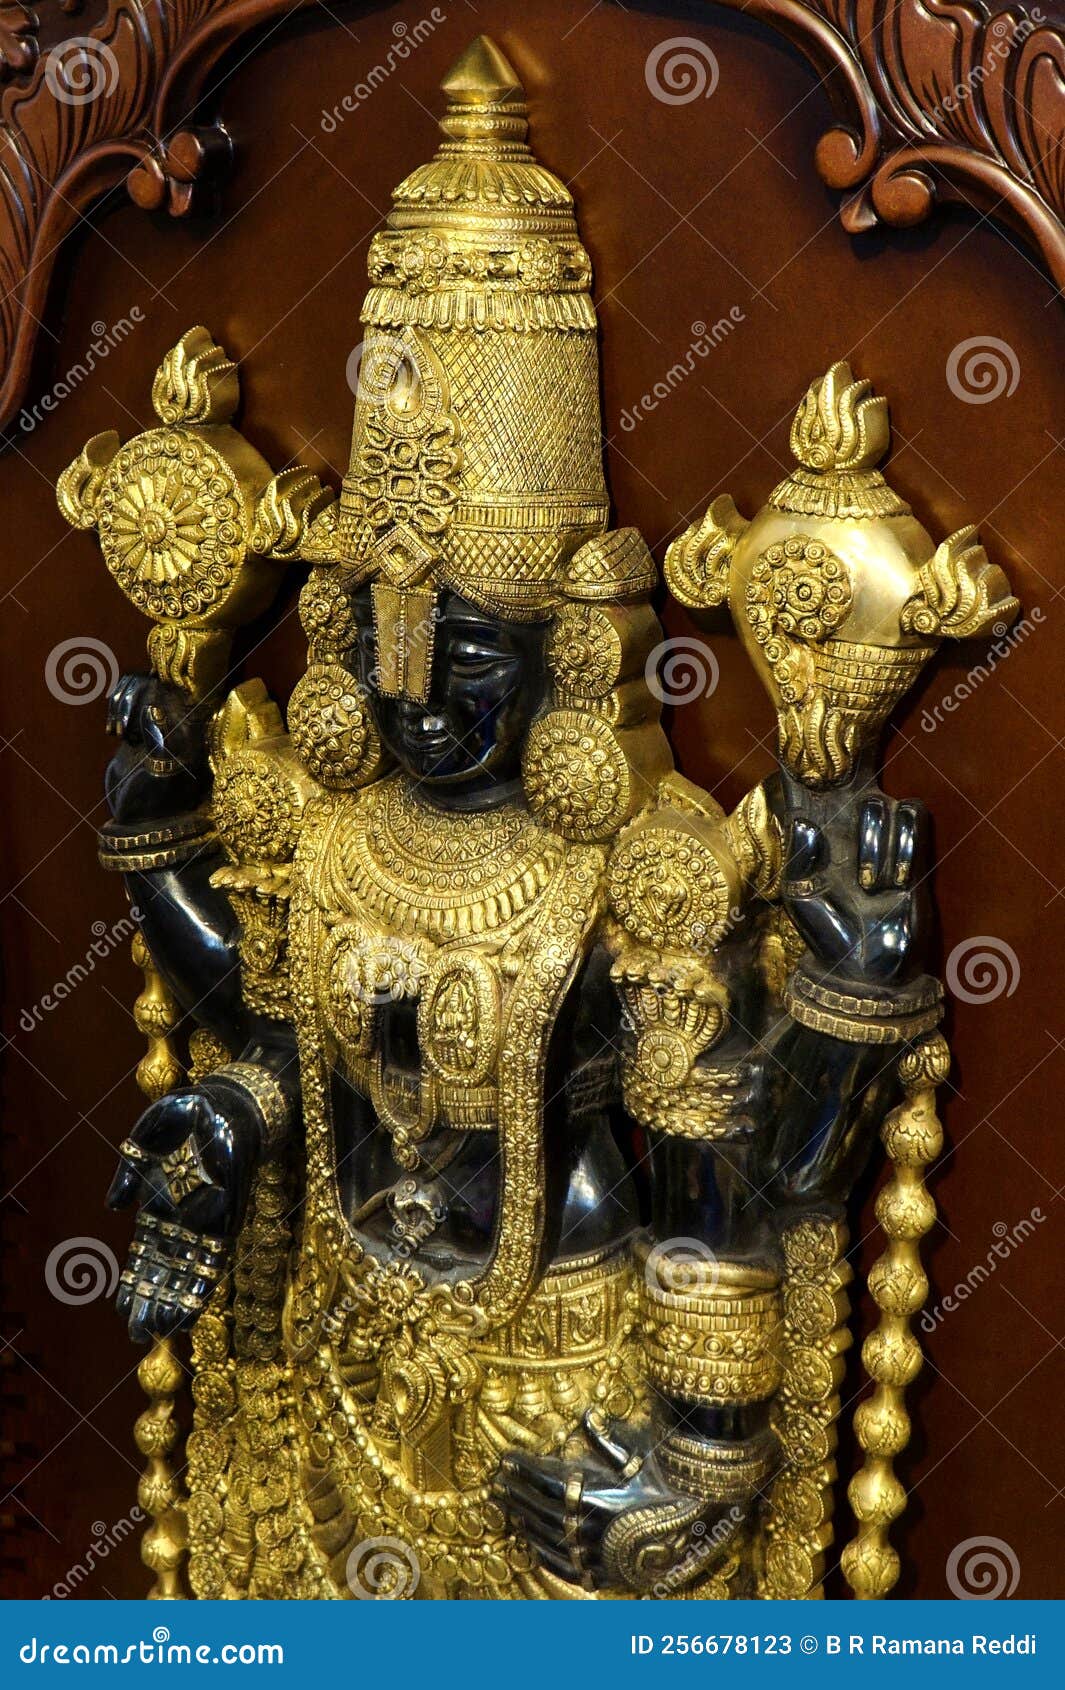 167 Venkateswara God Stock Photos - Free & Royalty-Free Stock ...